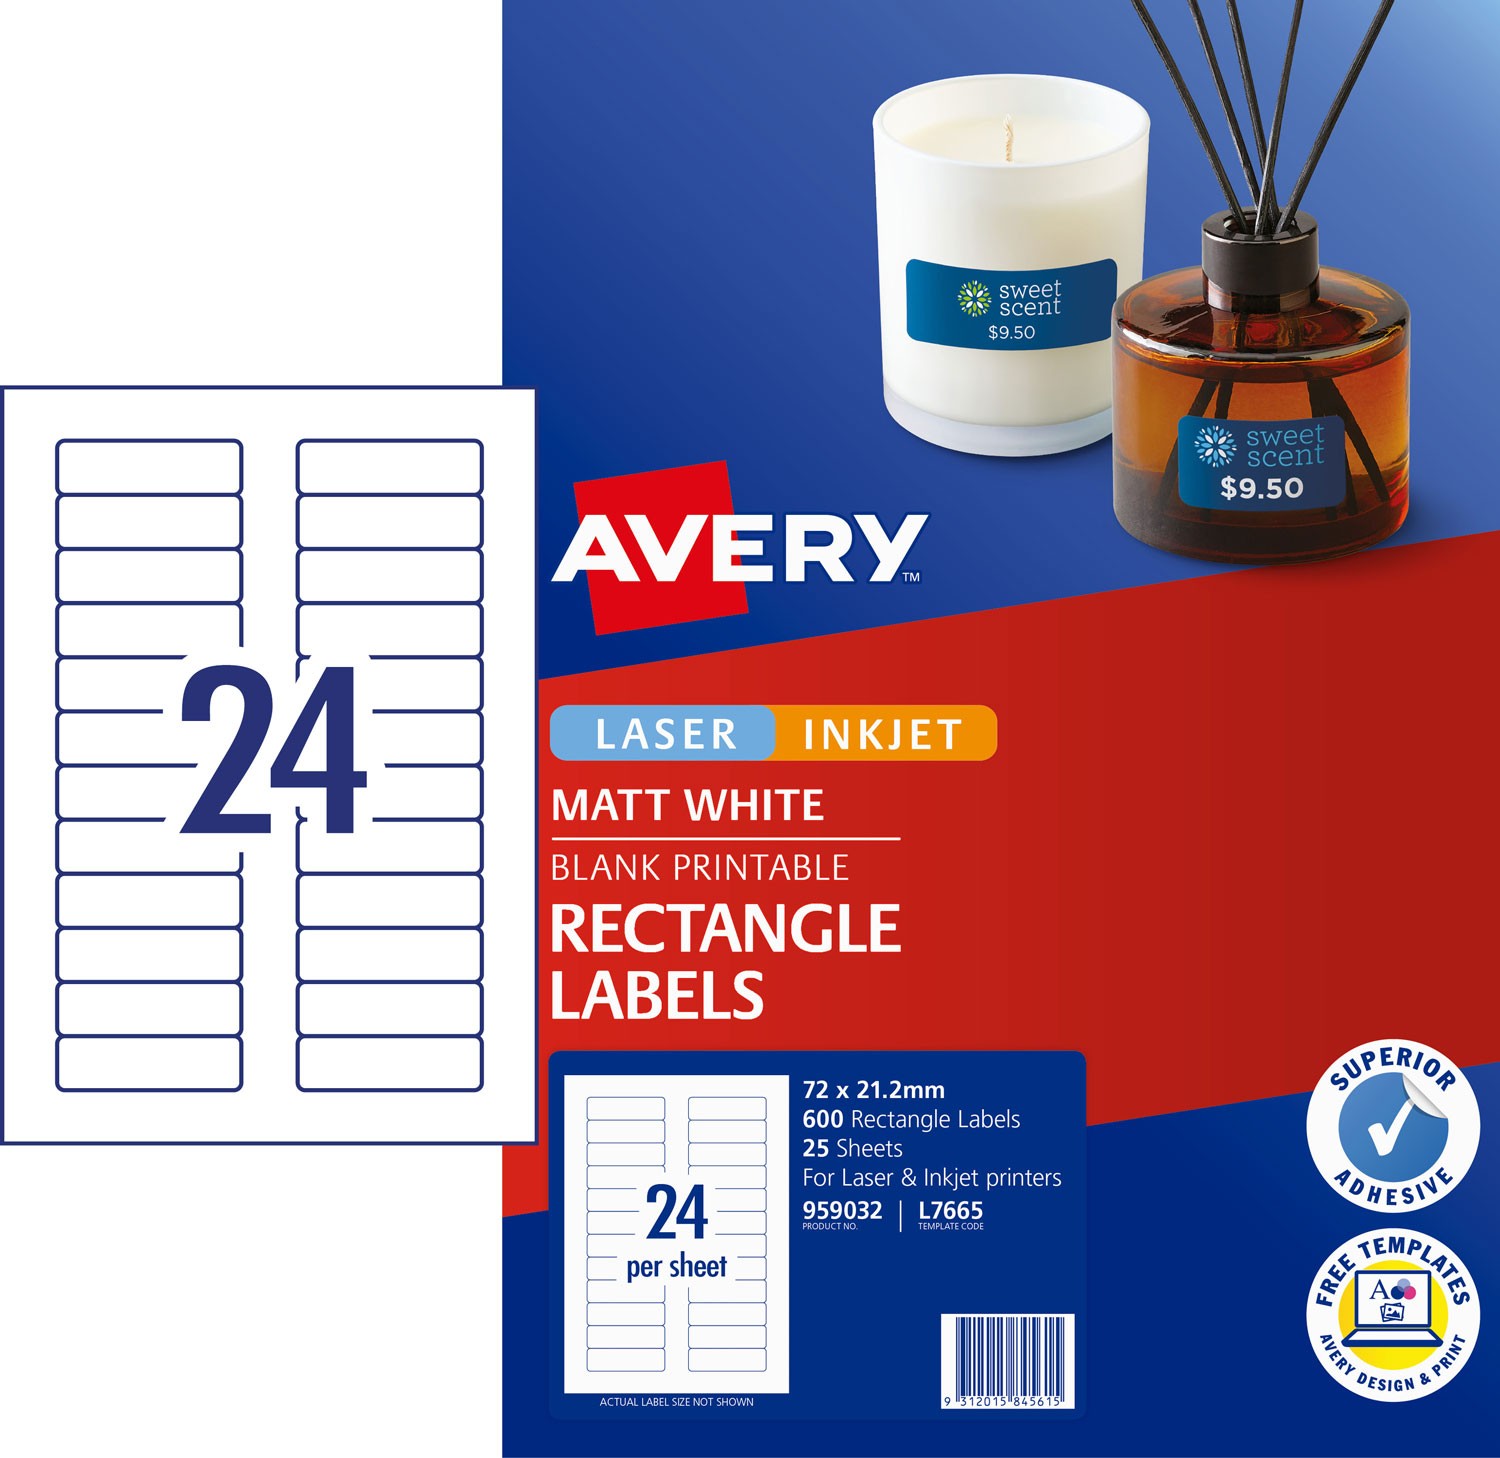 permanent-multi-purpose-labels-959032-avery-australia